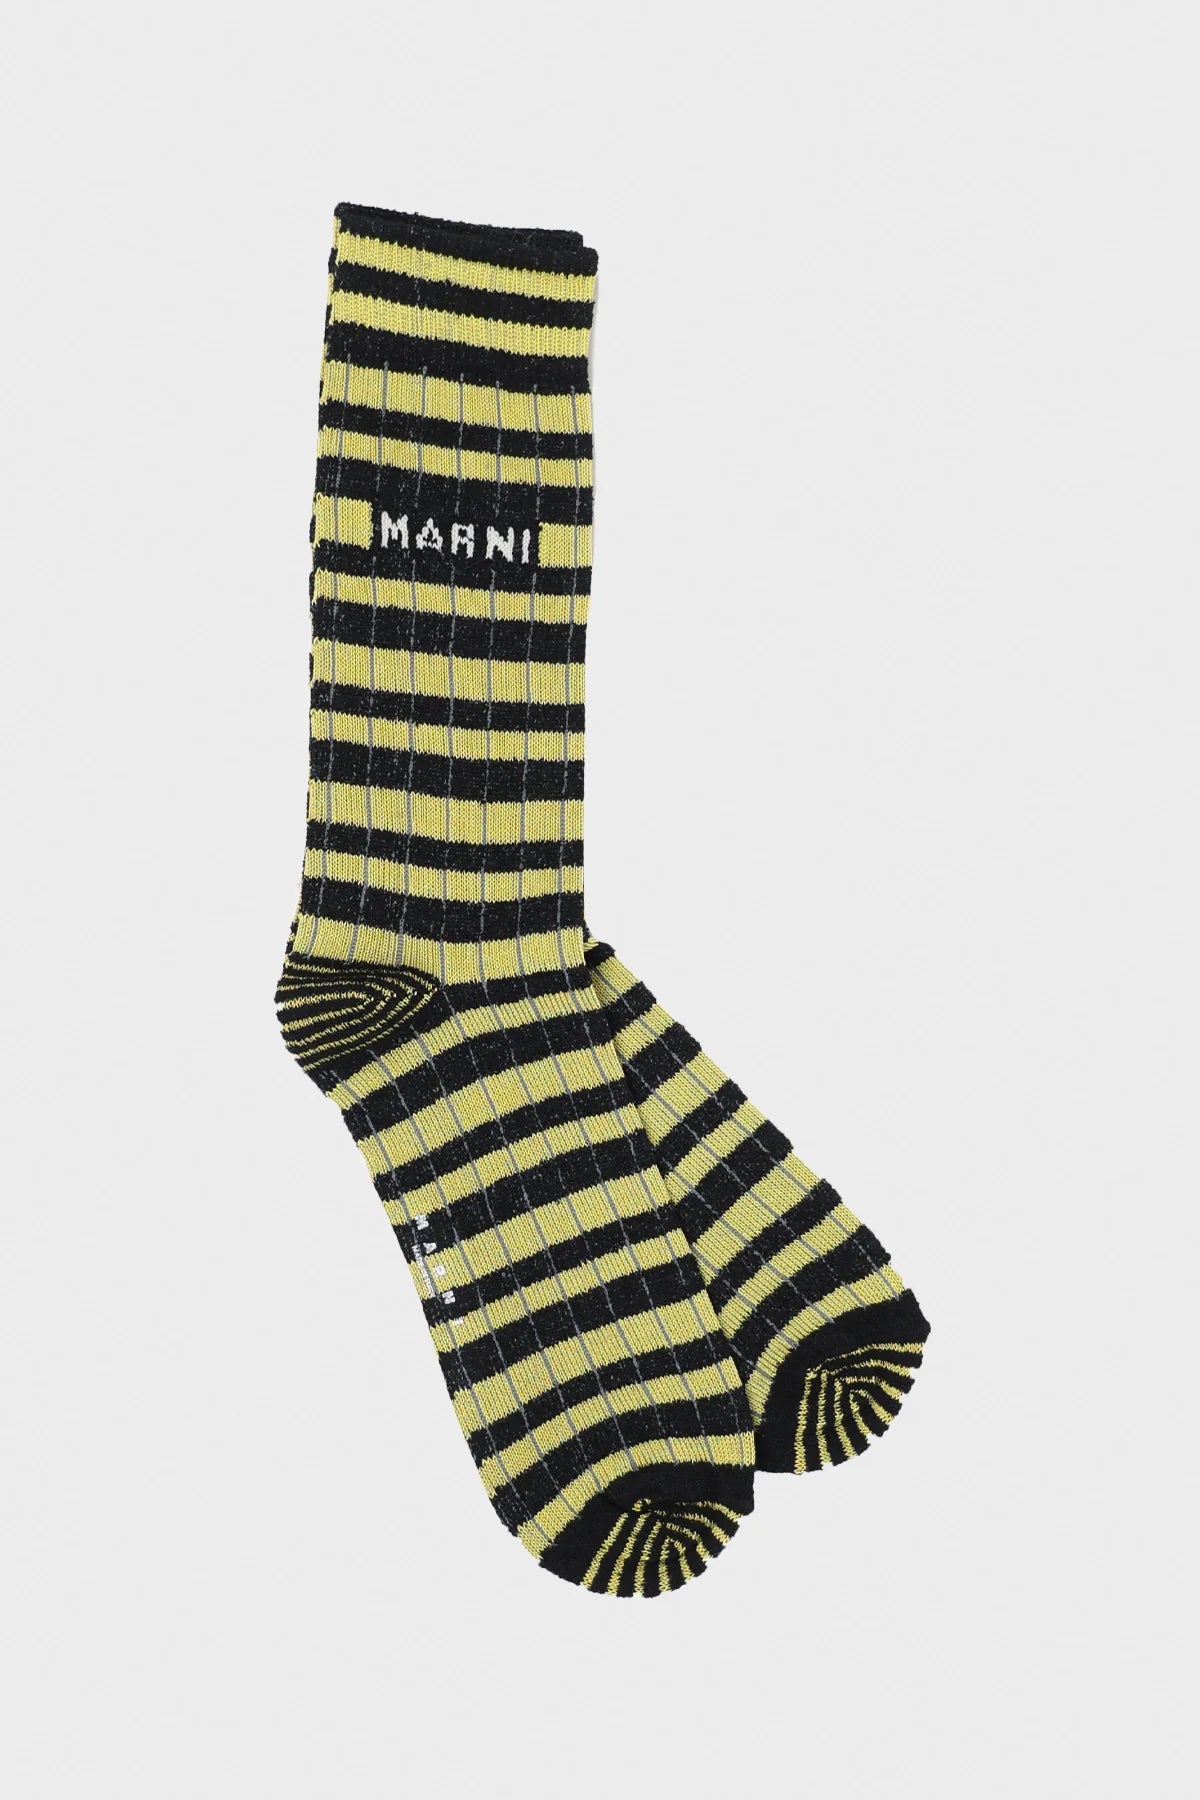 Marni Printed Striped Socks